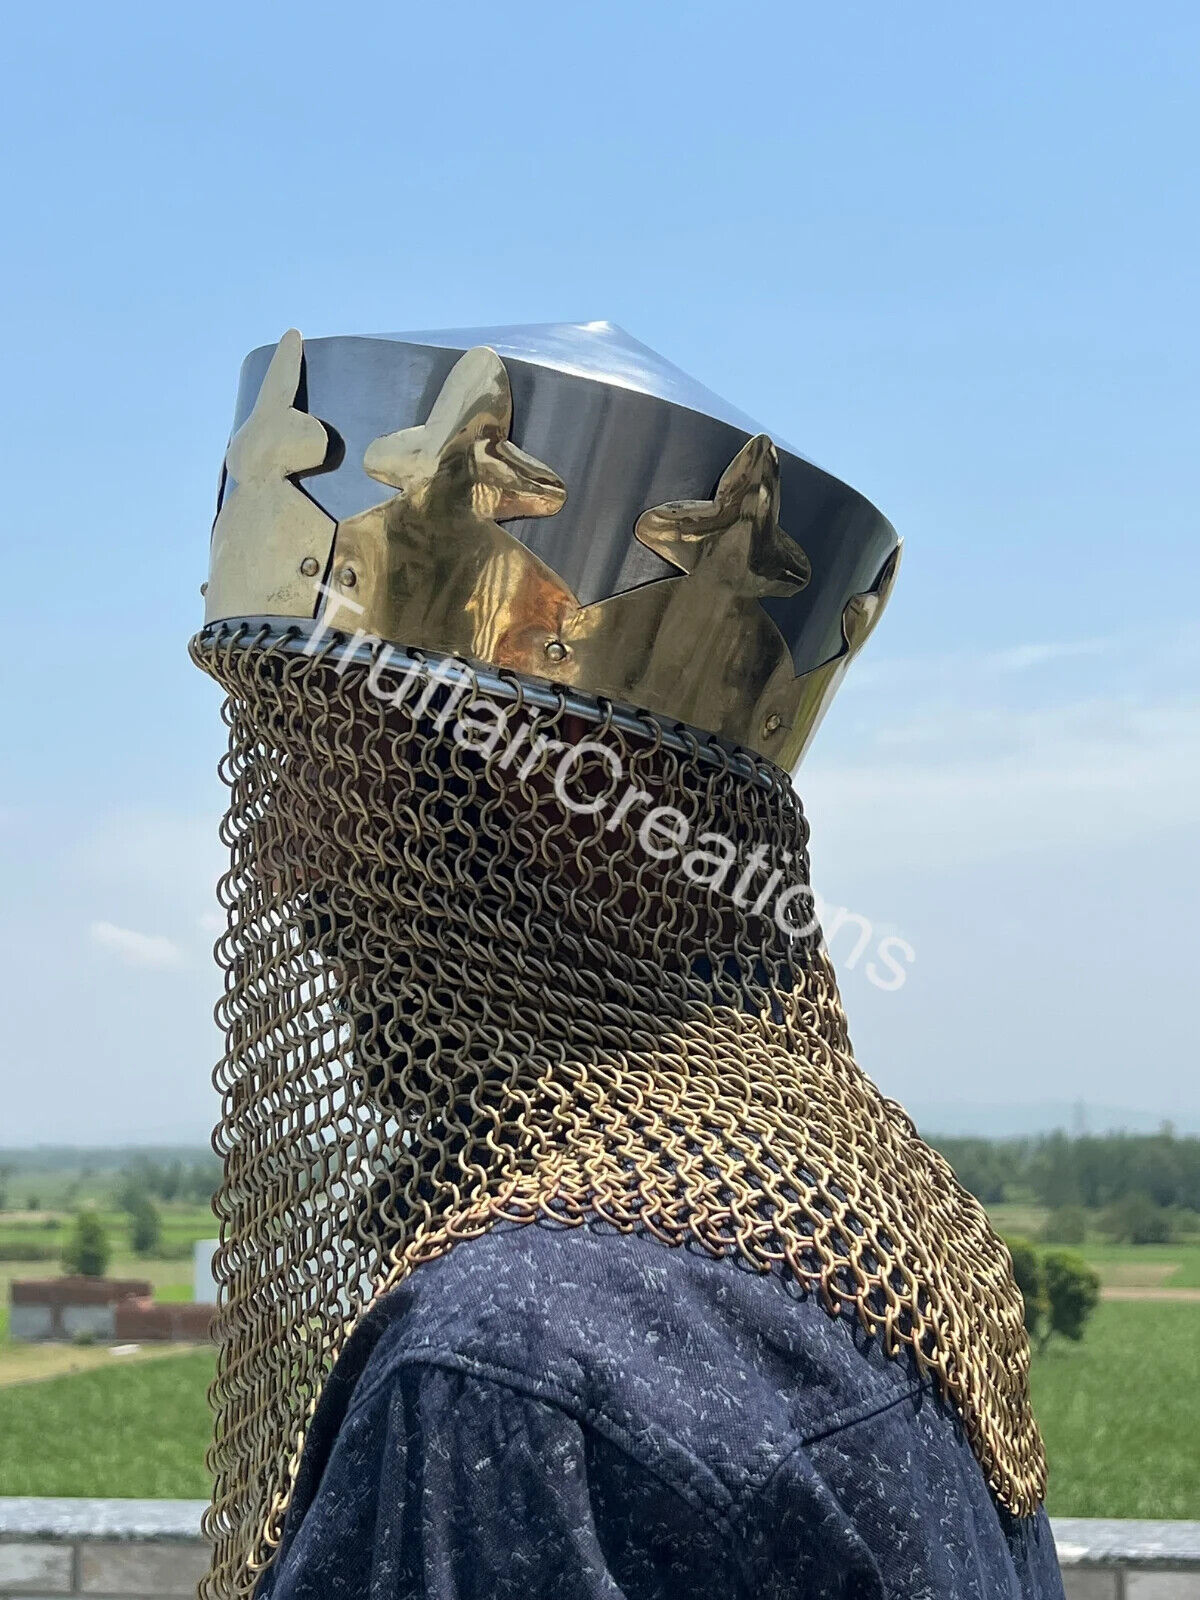 Monty Python King Arthur Royal Helmet with Chain Mail Armor Helmet